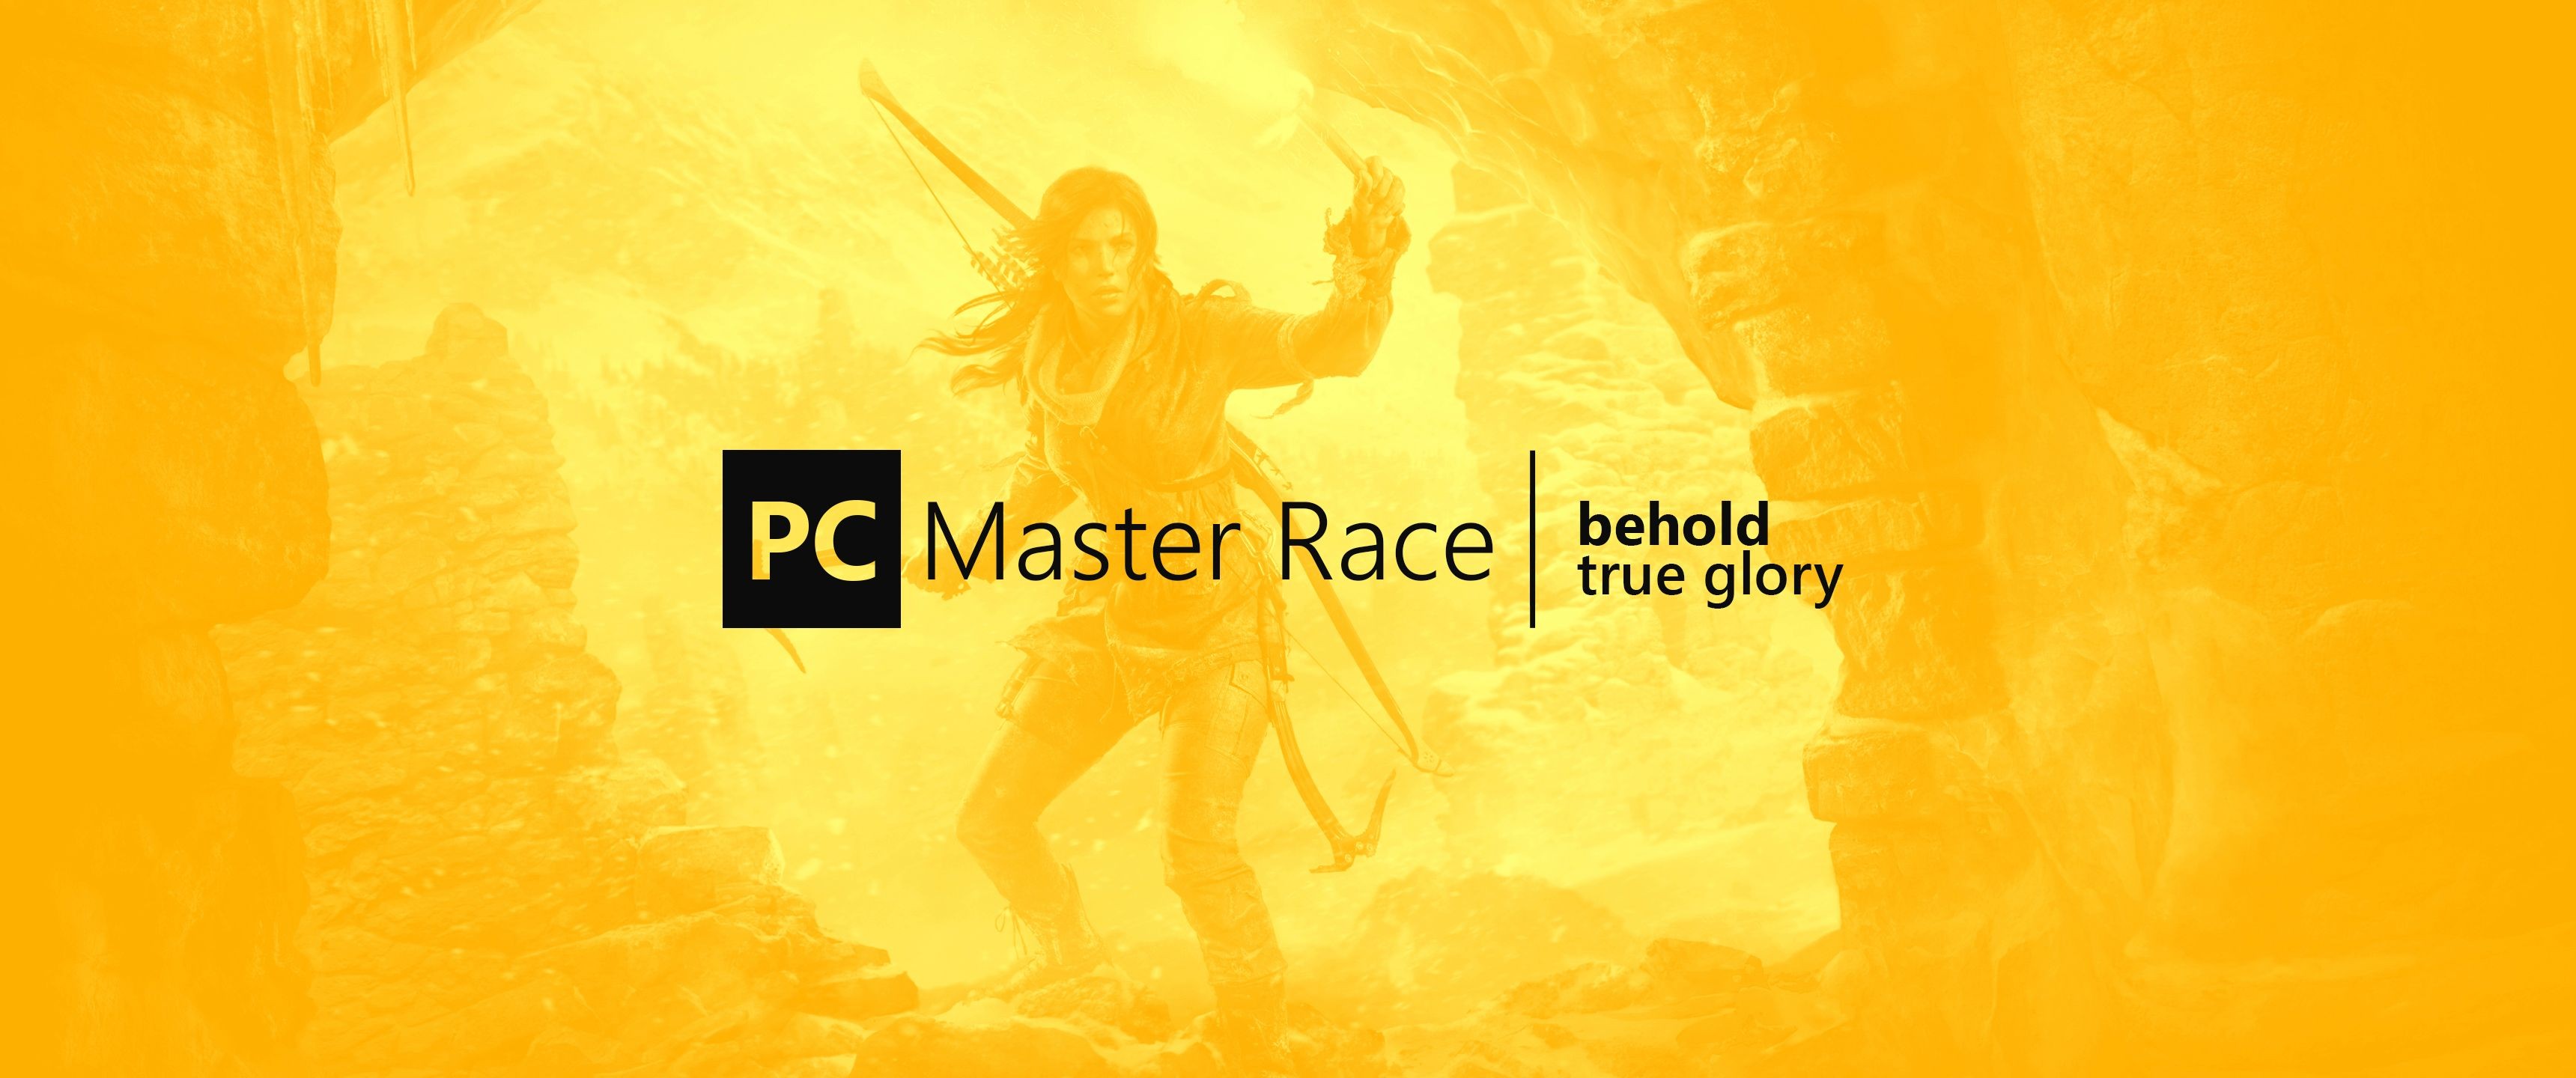 Lara Croft, PC Master  Race, PC gaming, Tomb Raider Wallpaper